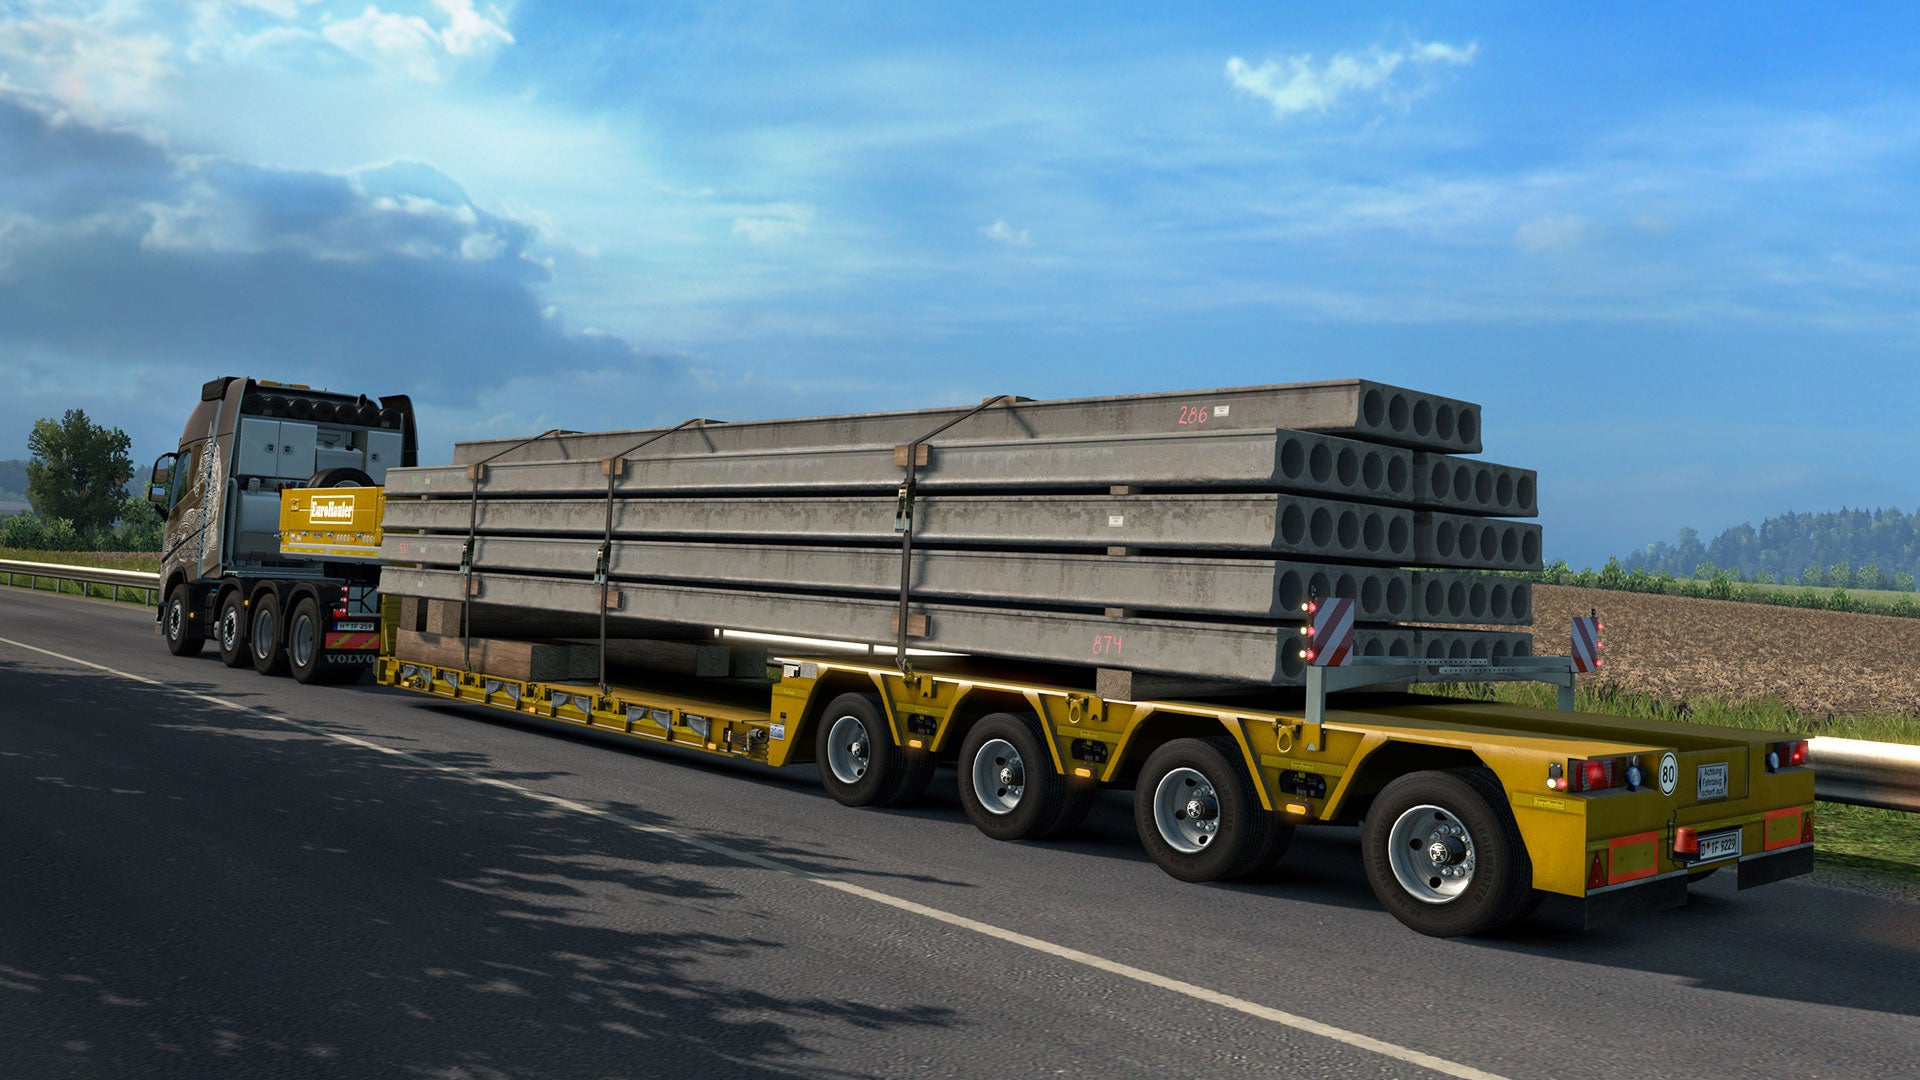 Euro Truck Simulator 2 Cargo Collection Bundle